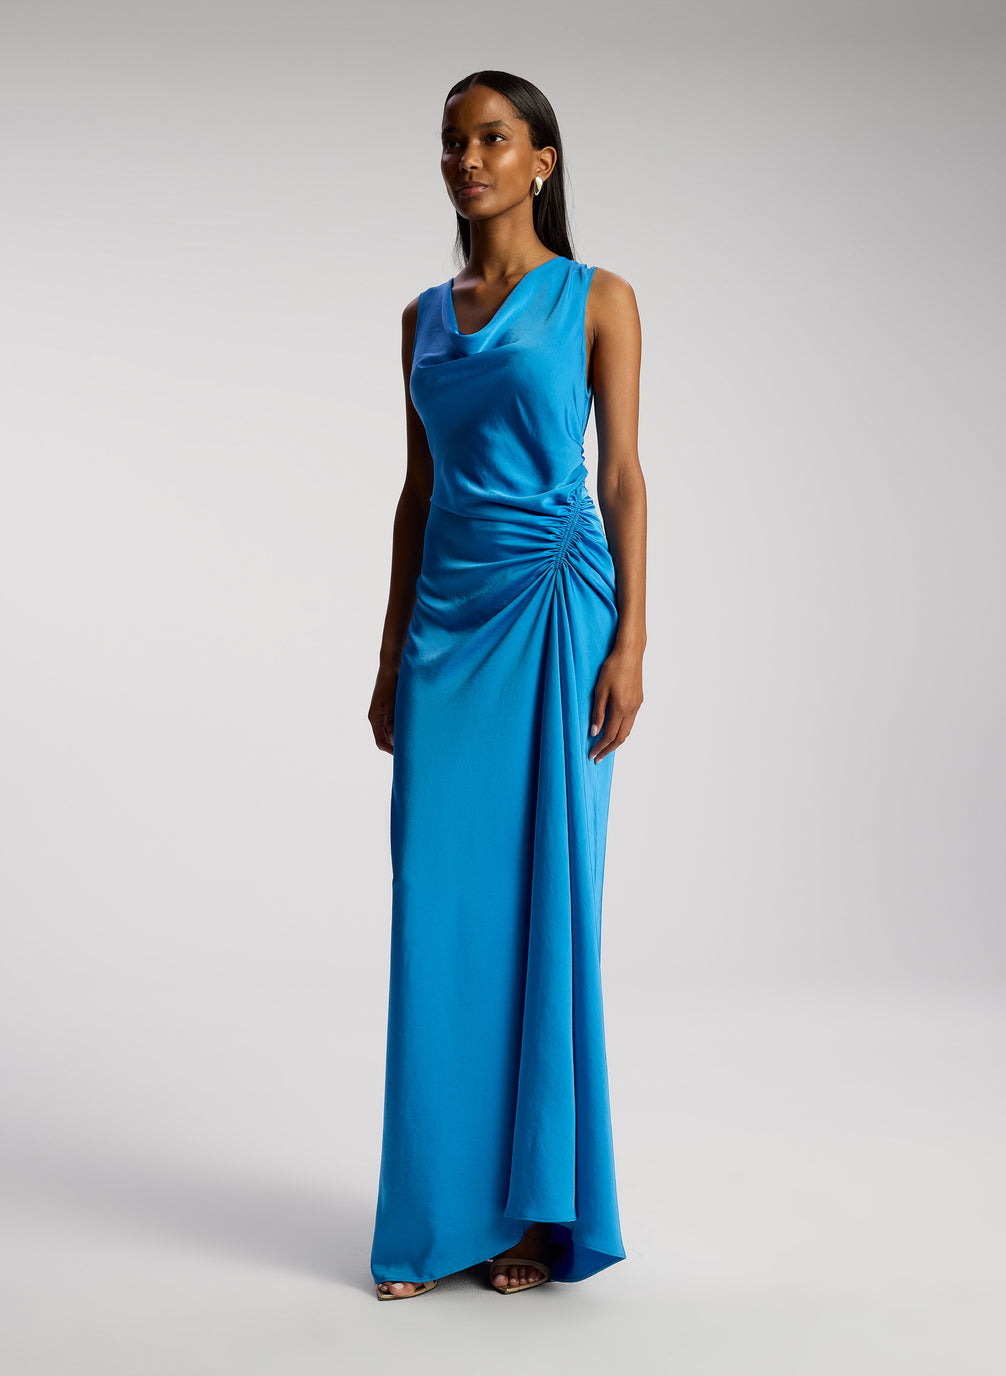 side view of woman wearing blue satin maxi dress